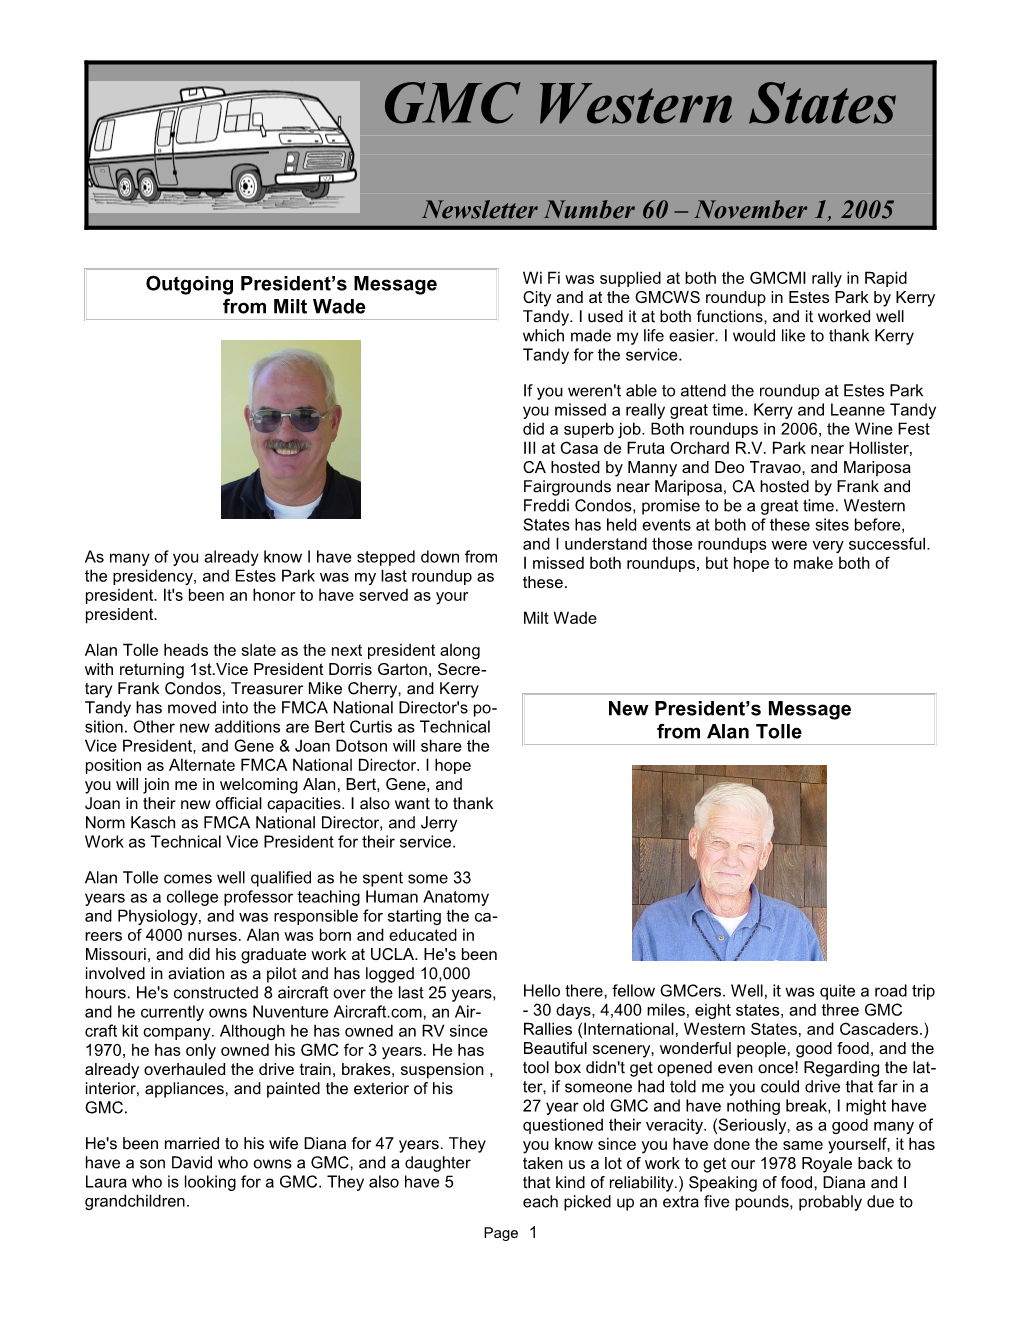 GMC Western States - Newsletter Number 60 November 1, 2005